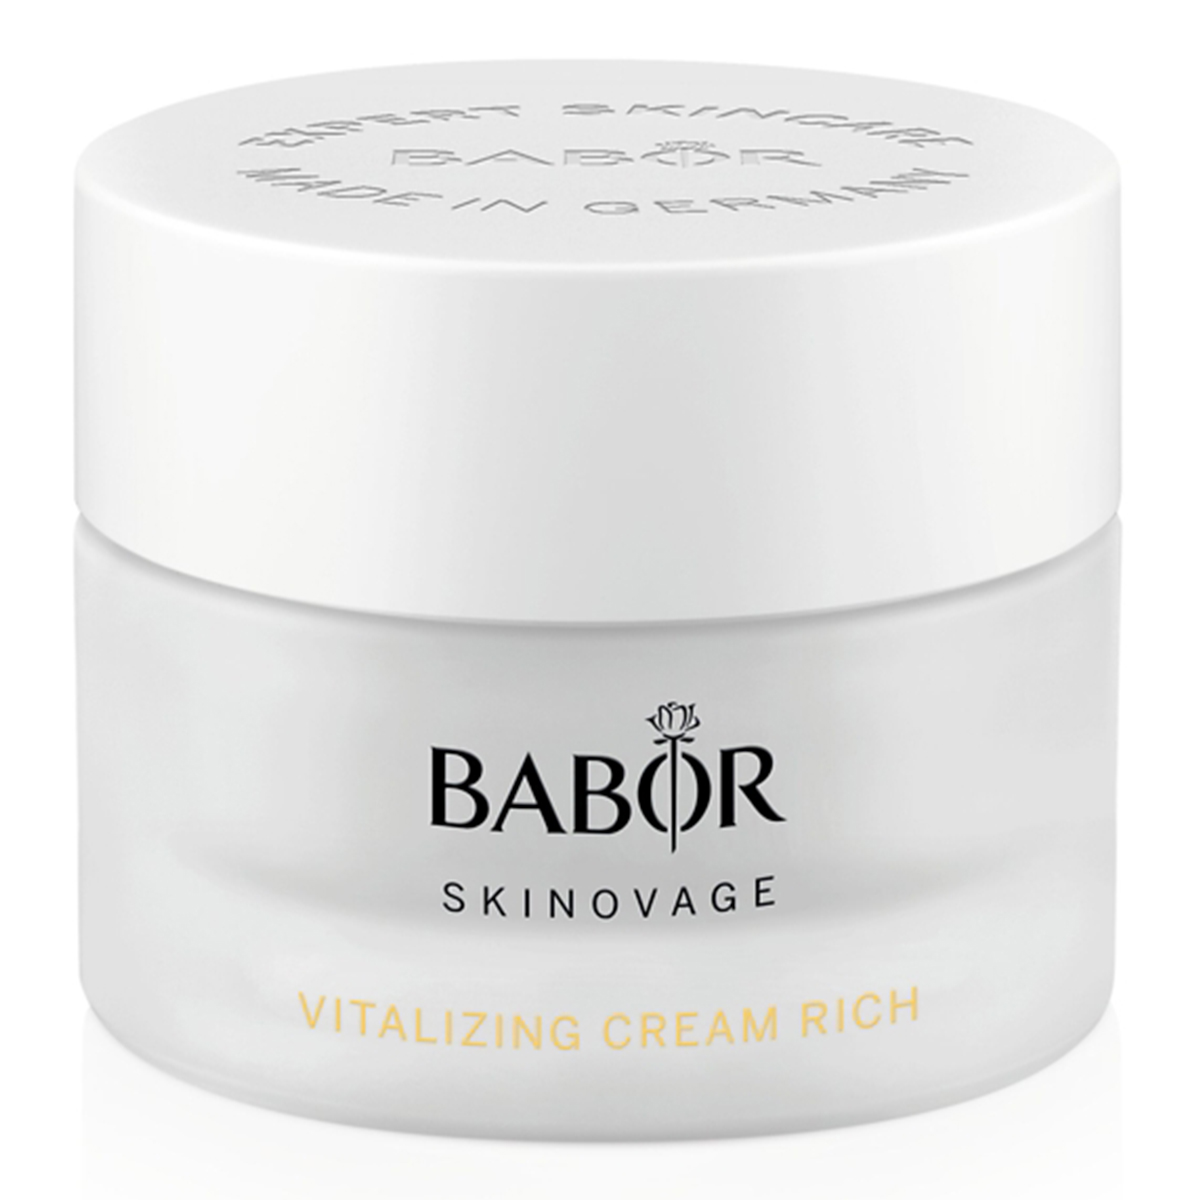 Babor Skinovage Vitalizing Cream Rich